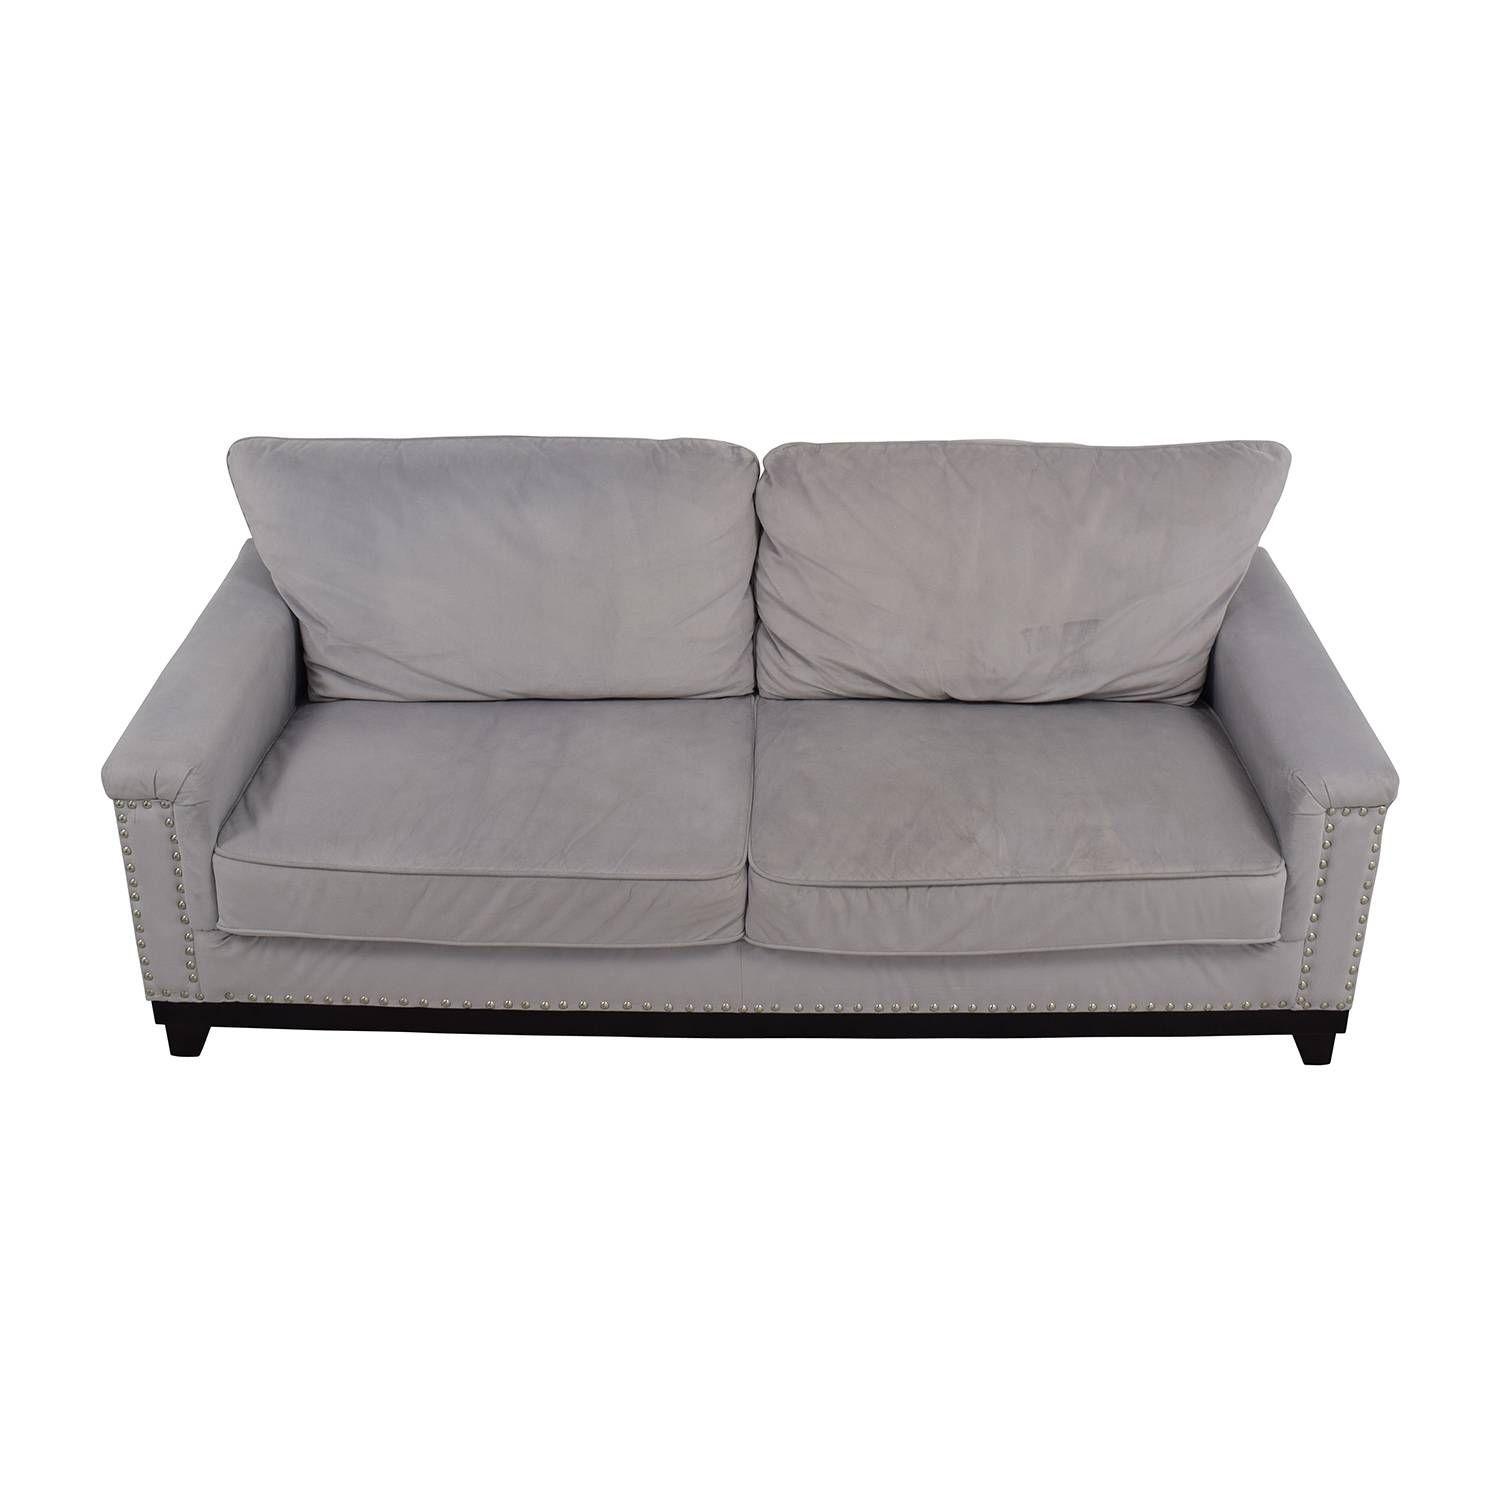 Sofa : Classic Sofas For Sale Room Design Plan Modern To Classic Inside Classic Sofas For Sale (View 11 of 30)